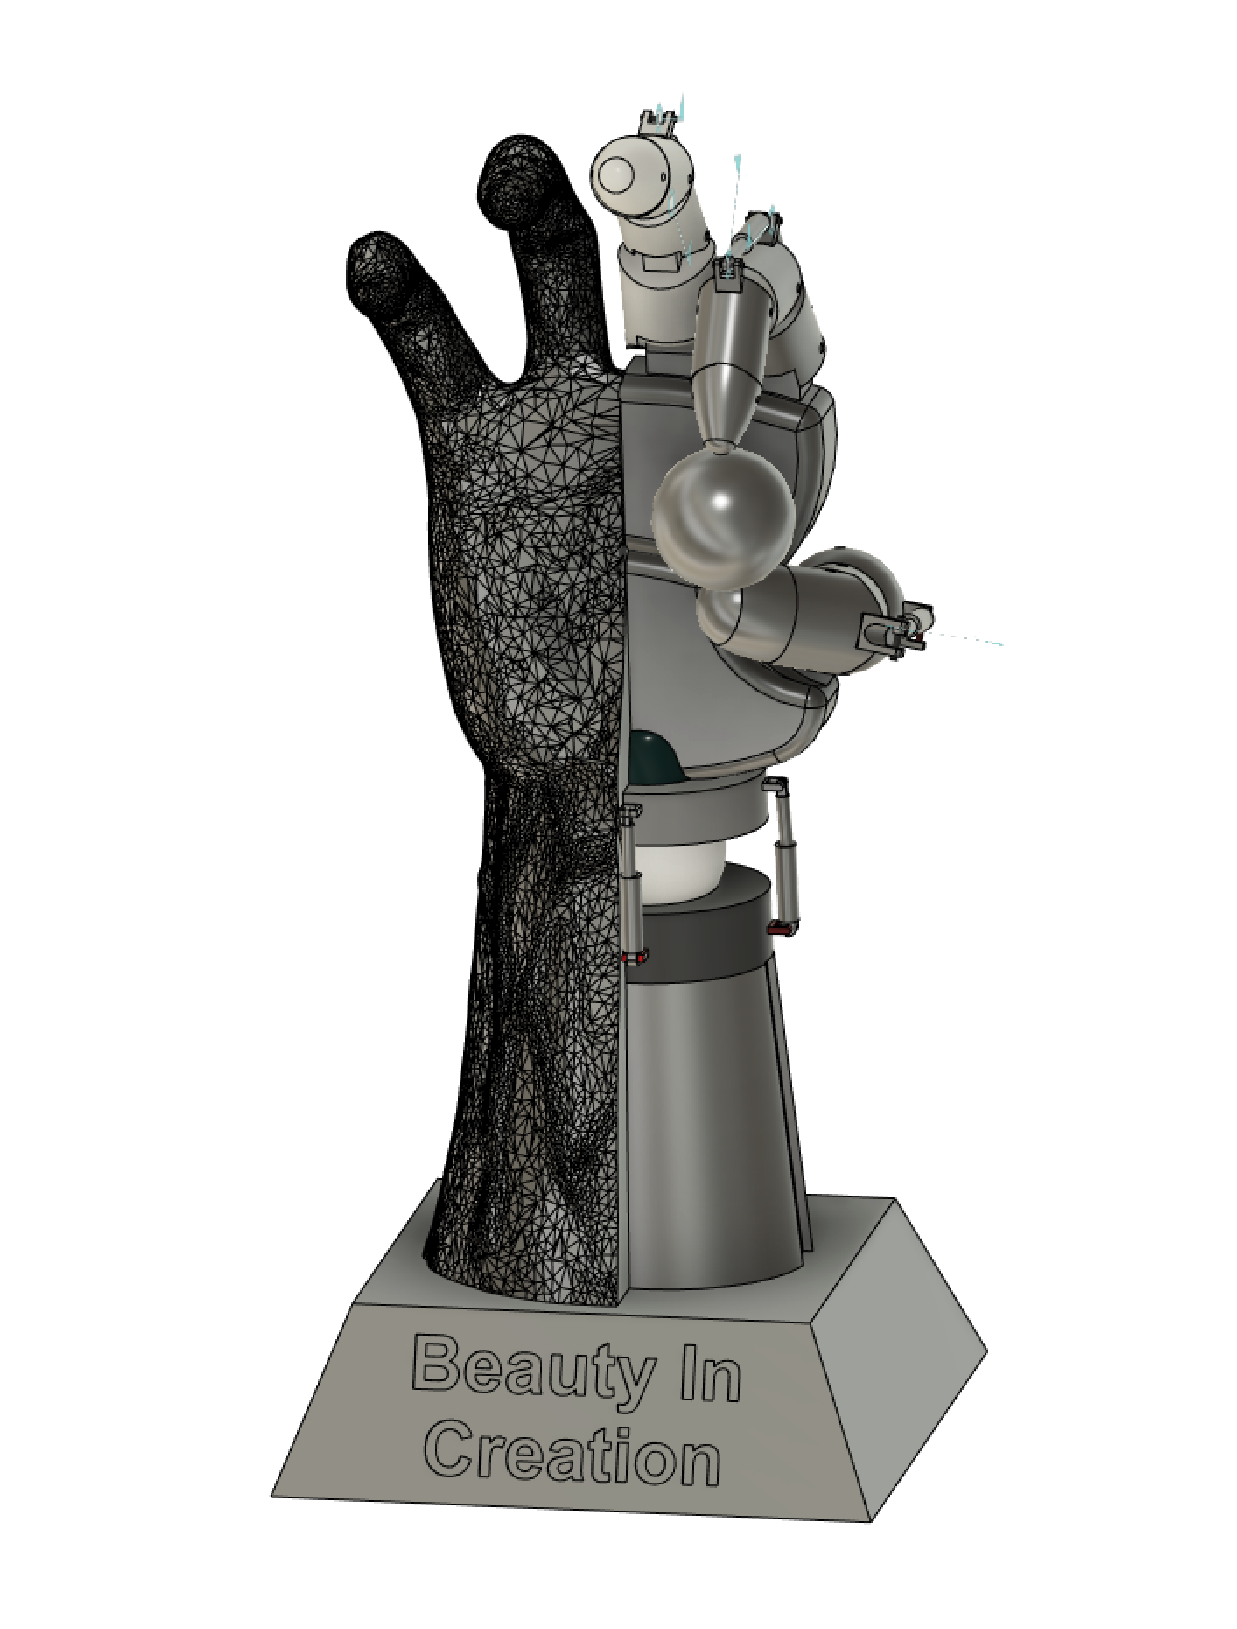 Cyborg Hand Hybrid Sculpture